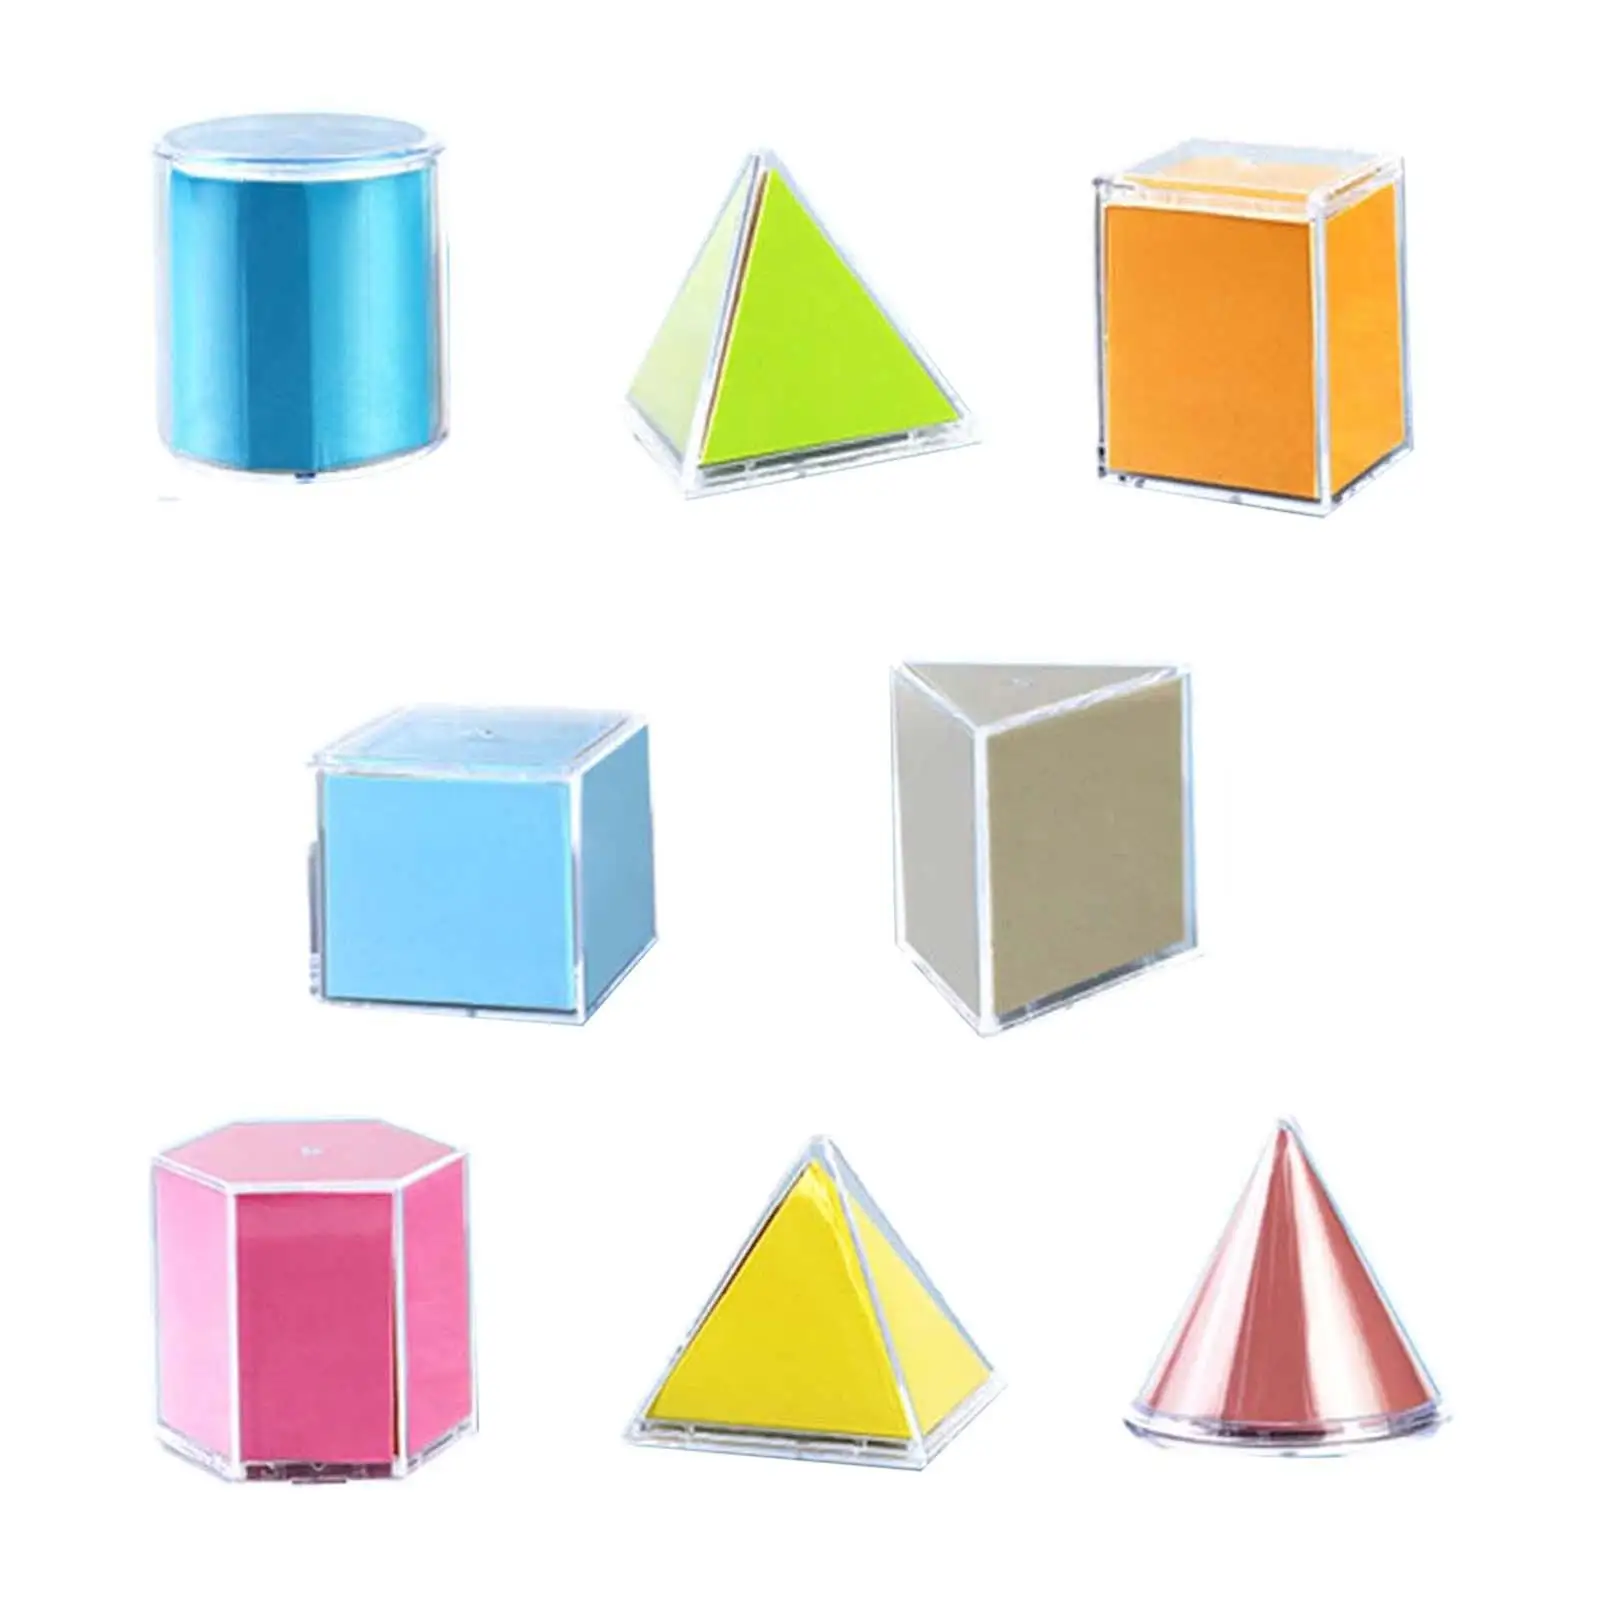 8Pcs Geometric Shape Blocks Educational Toy Math Learning Material for Children Teacher Supplies Math Helper Preschool Ages 3+